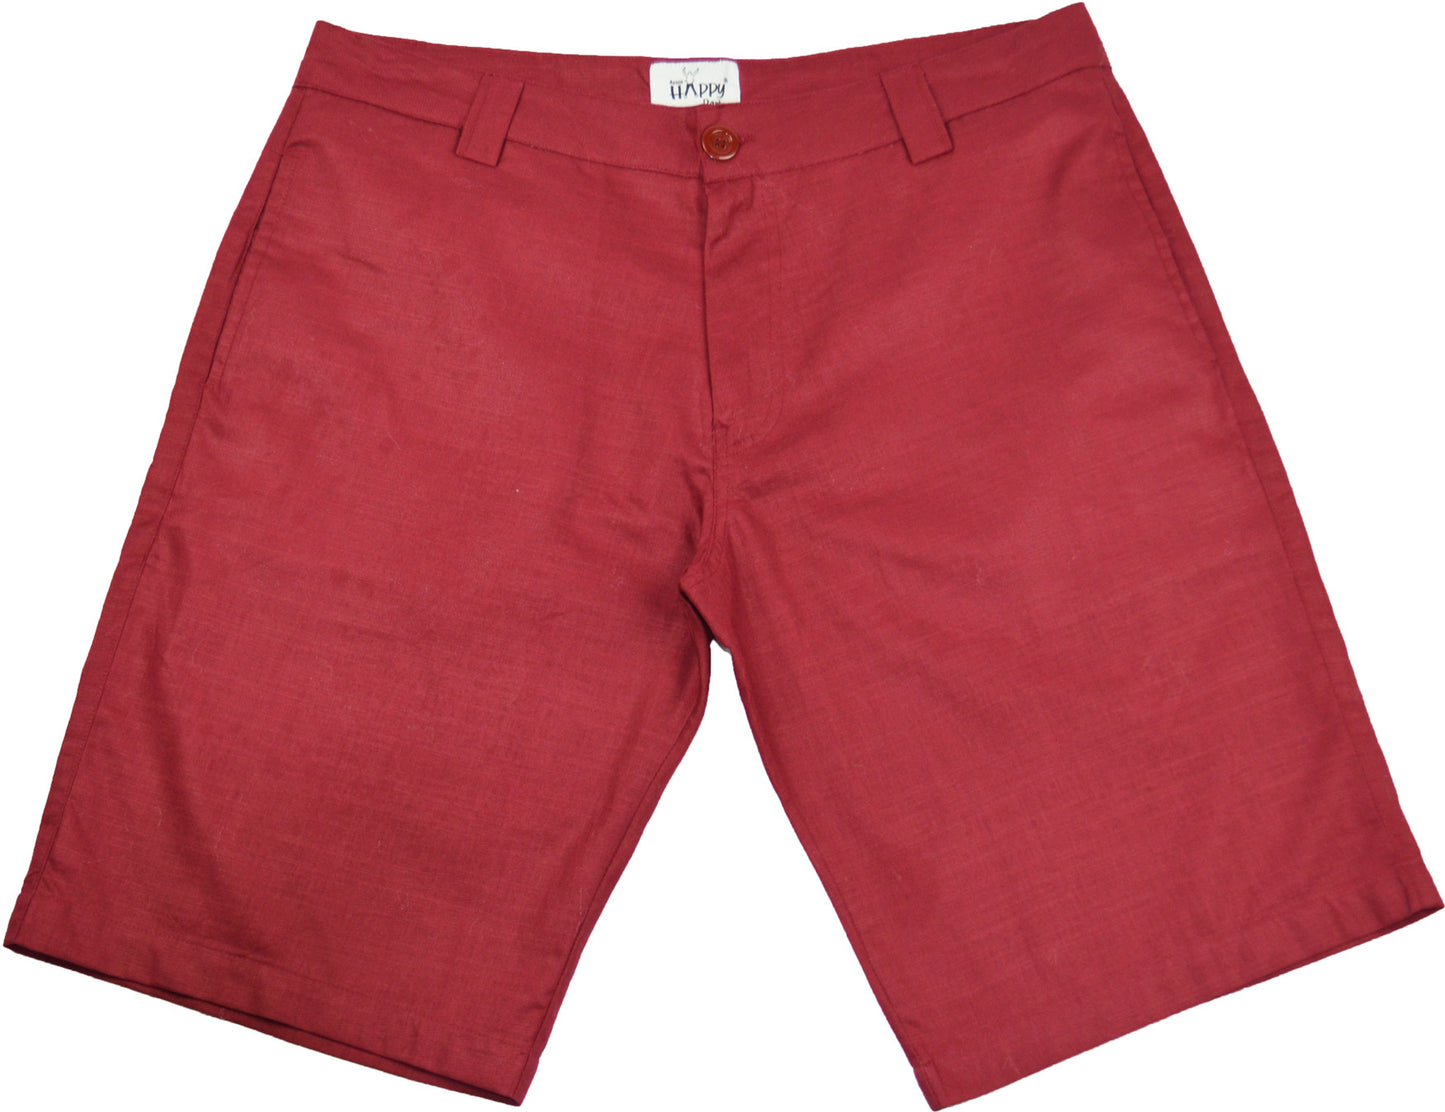 Burgundy Red Cotton BoardShorts - Happy Pants - 1